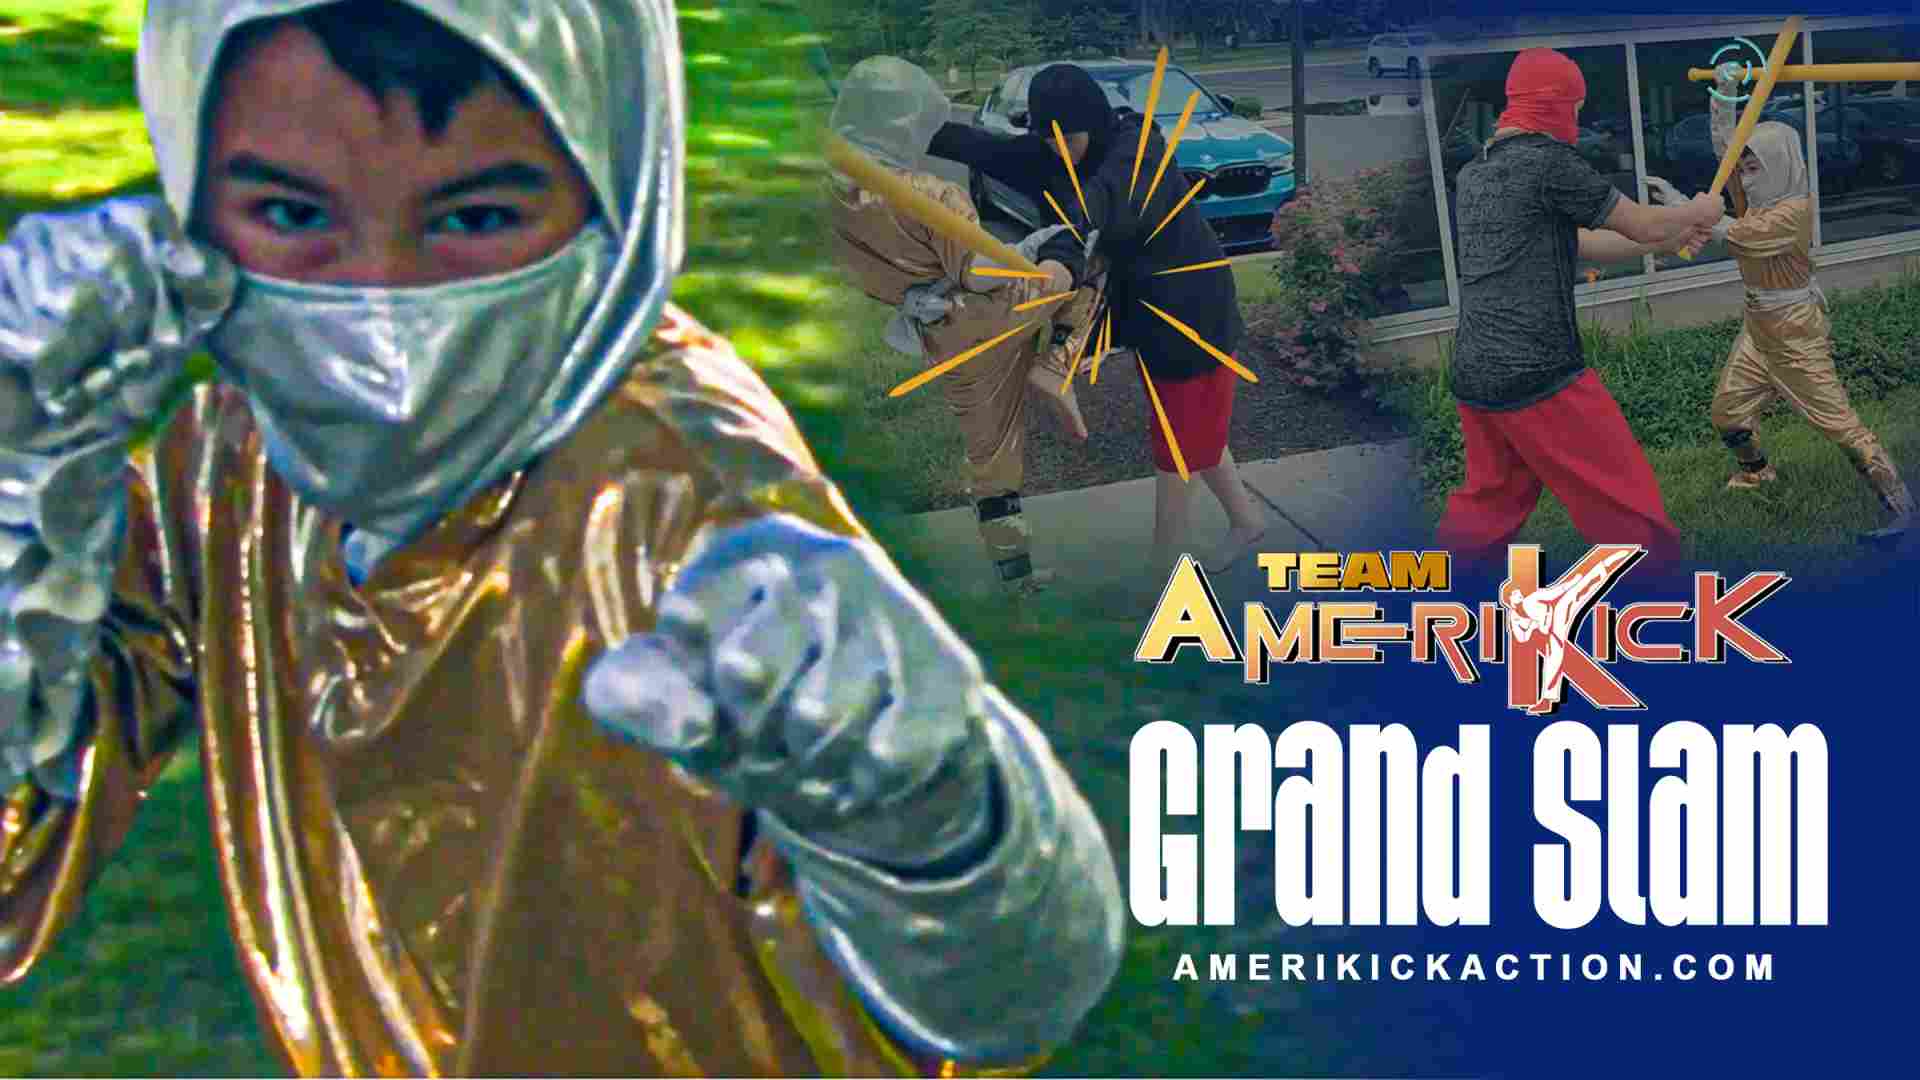 Amerikick Action | Team Amerikick: Grand Slam!